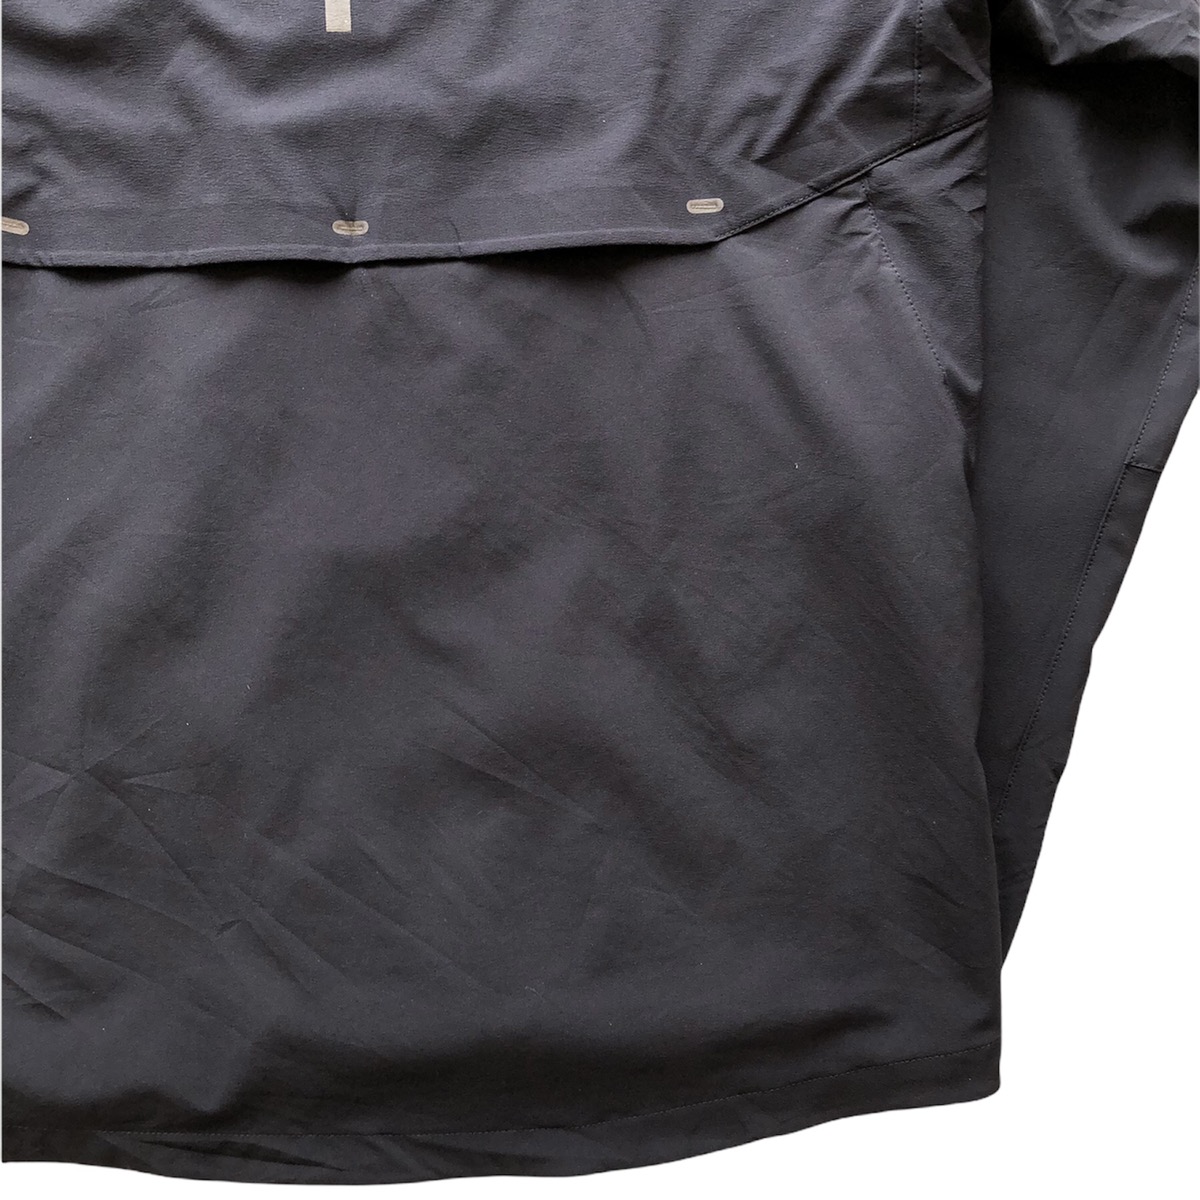 New Balance Zipper Sweater Jacket - 10